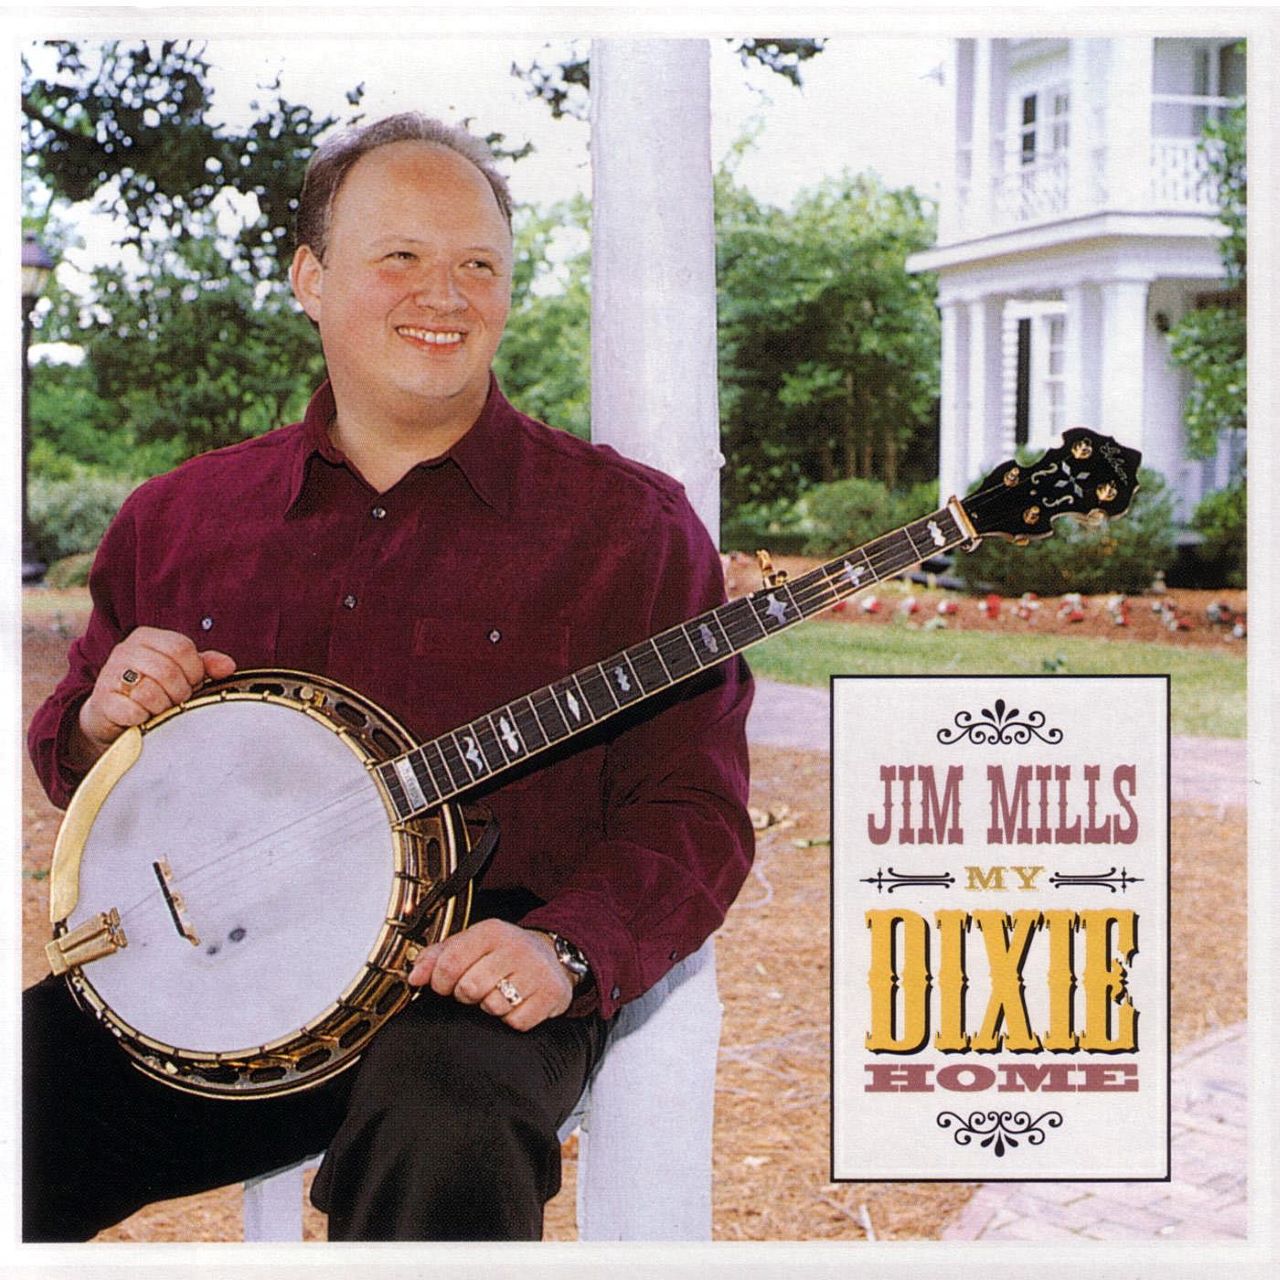 Jim Mills - My Dixie Home cover album